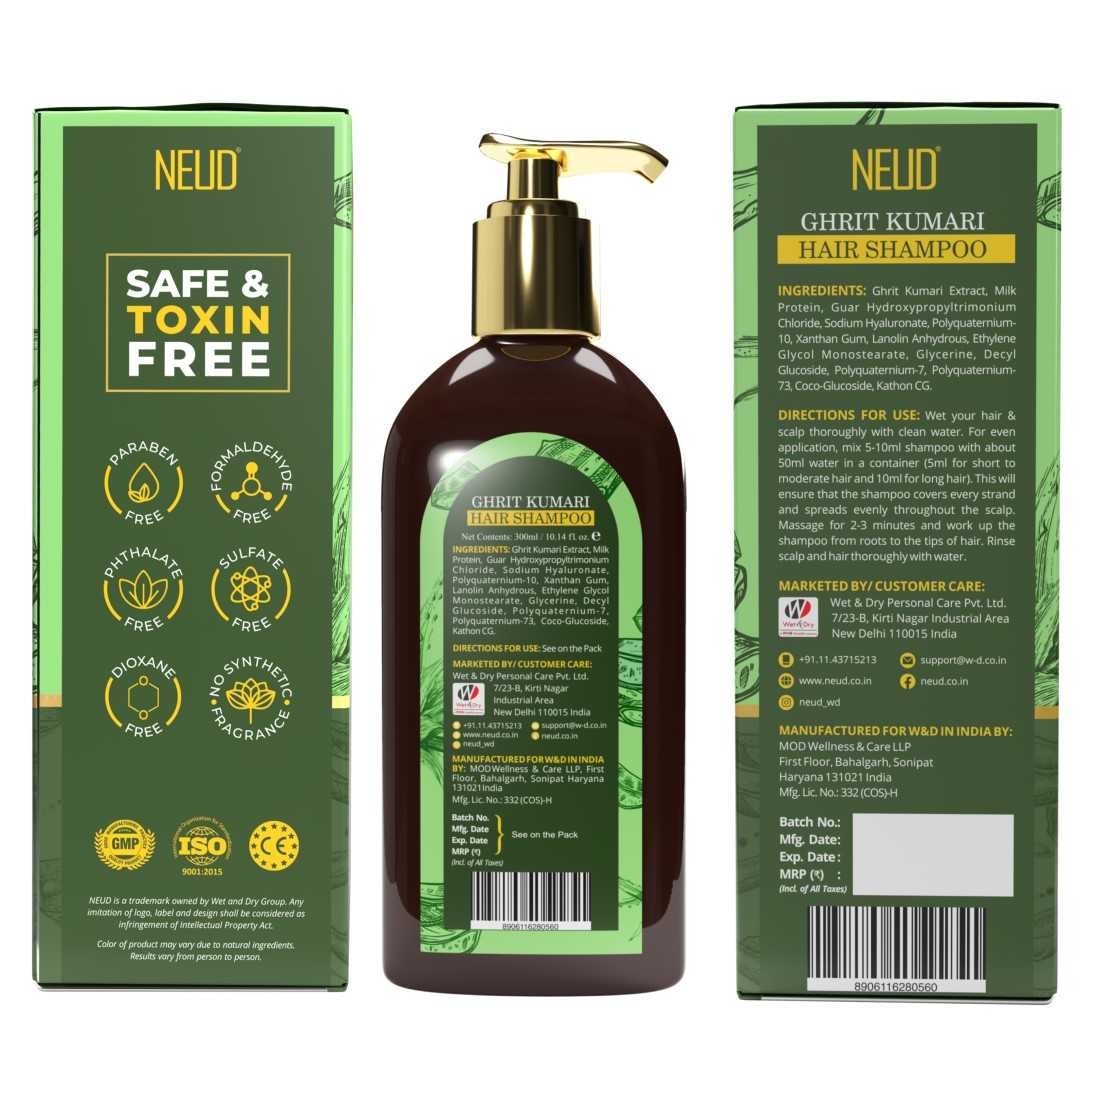 NEUD Premium Ghrit Kumari Hair Shampoo for Men & Women